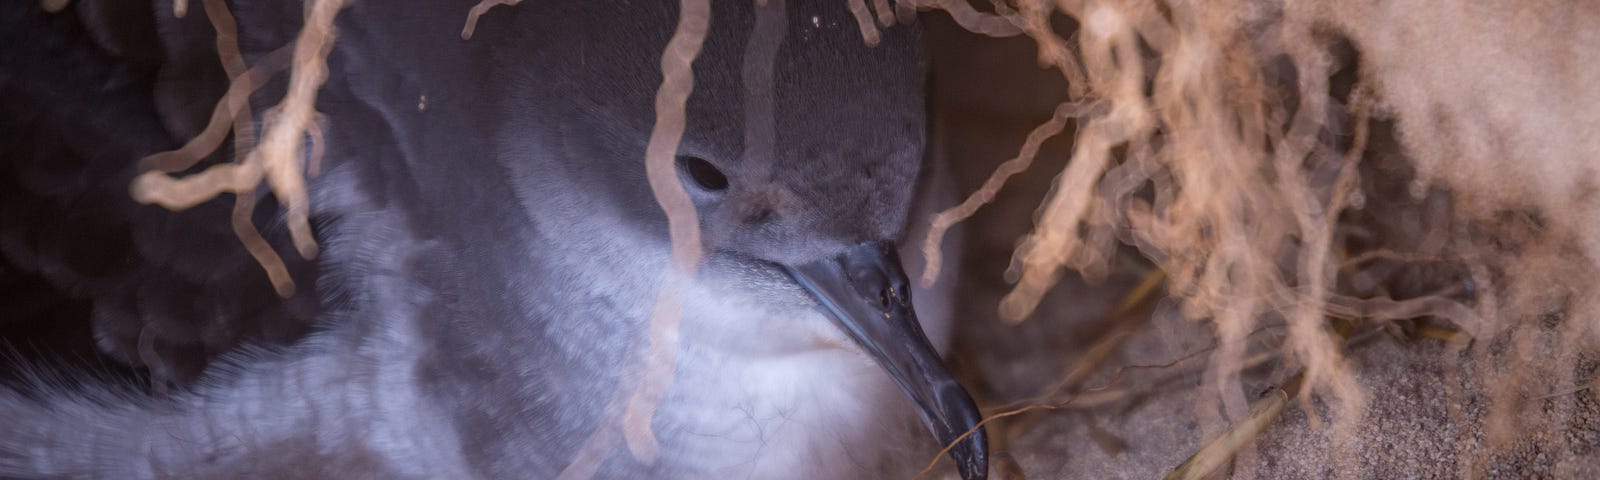 Wedge-tailed shearwater bird in an underground burrow.